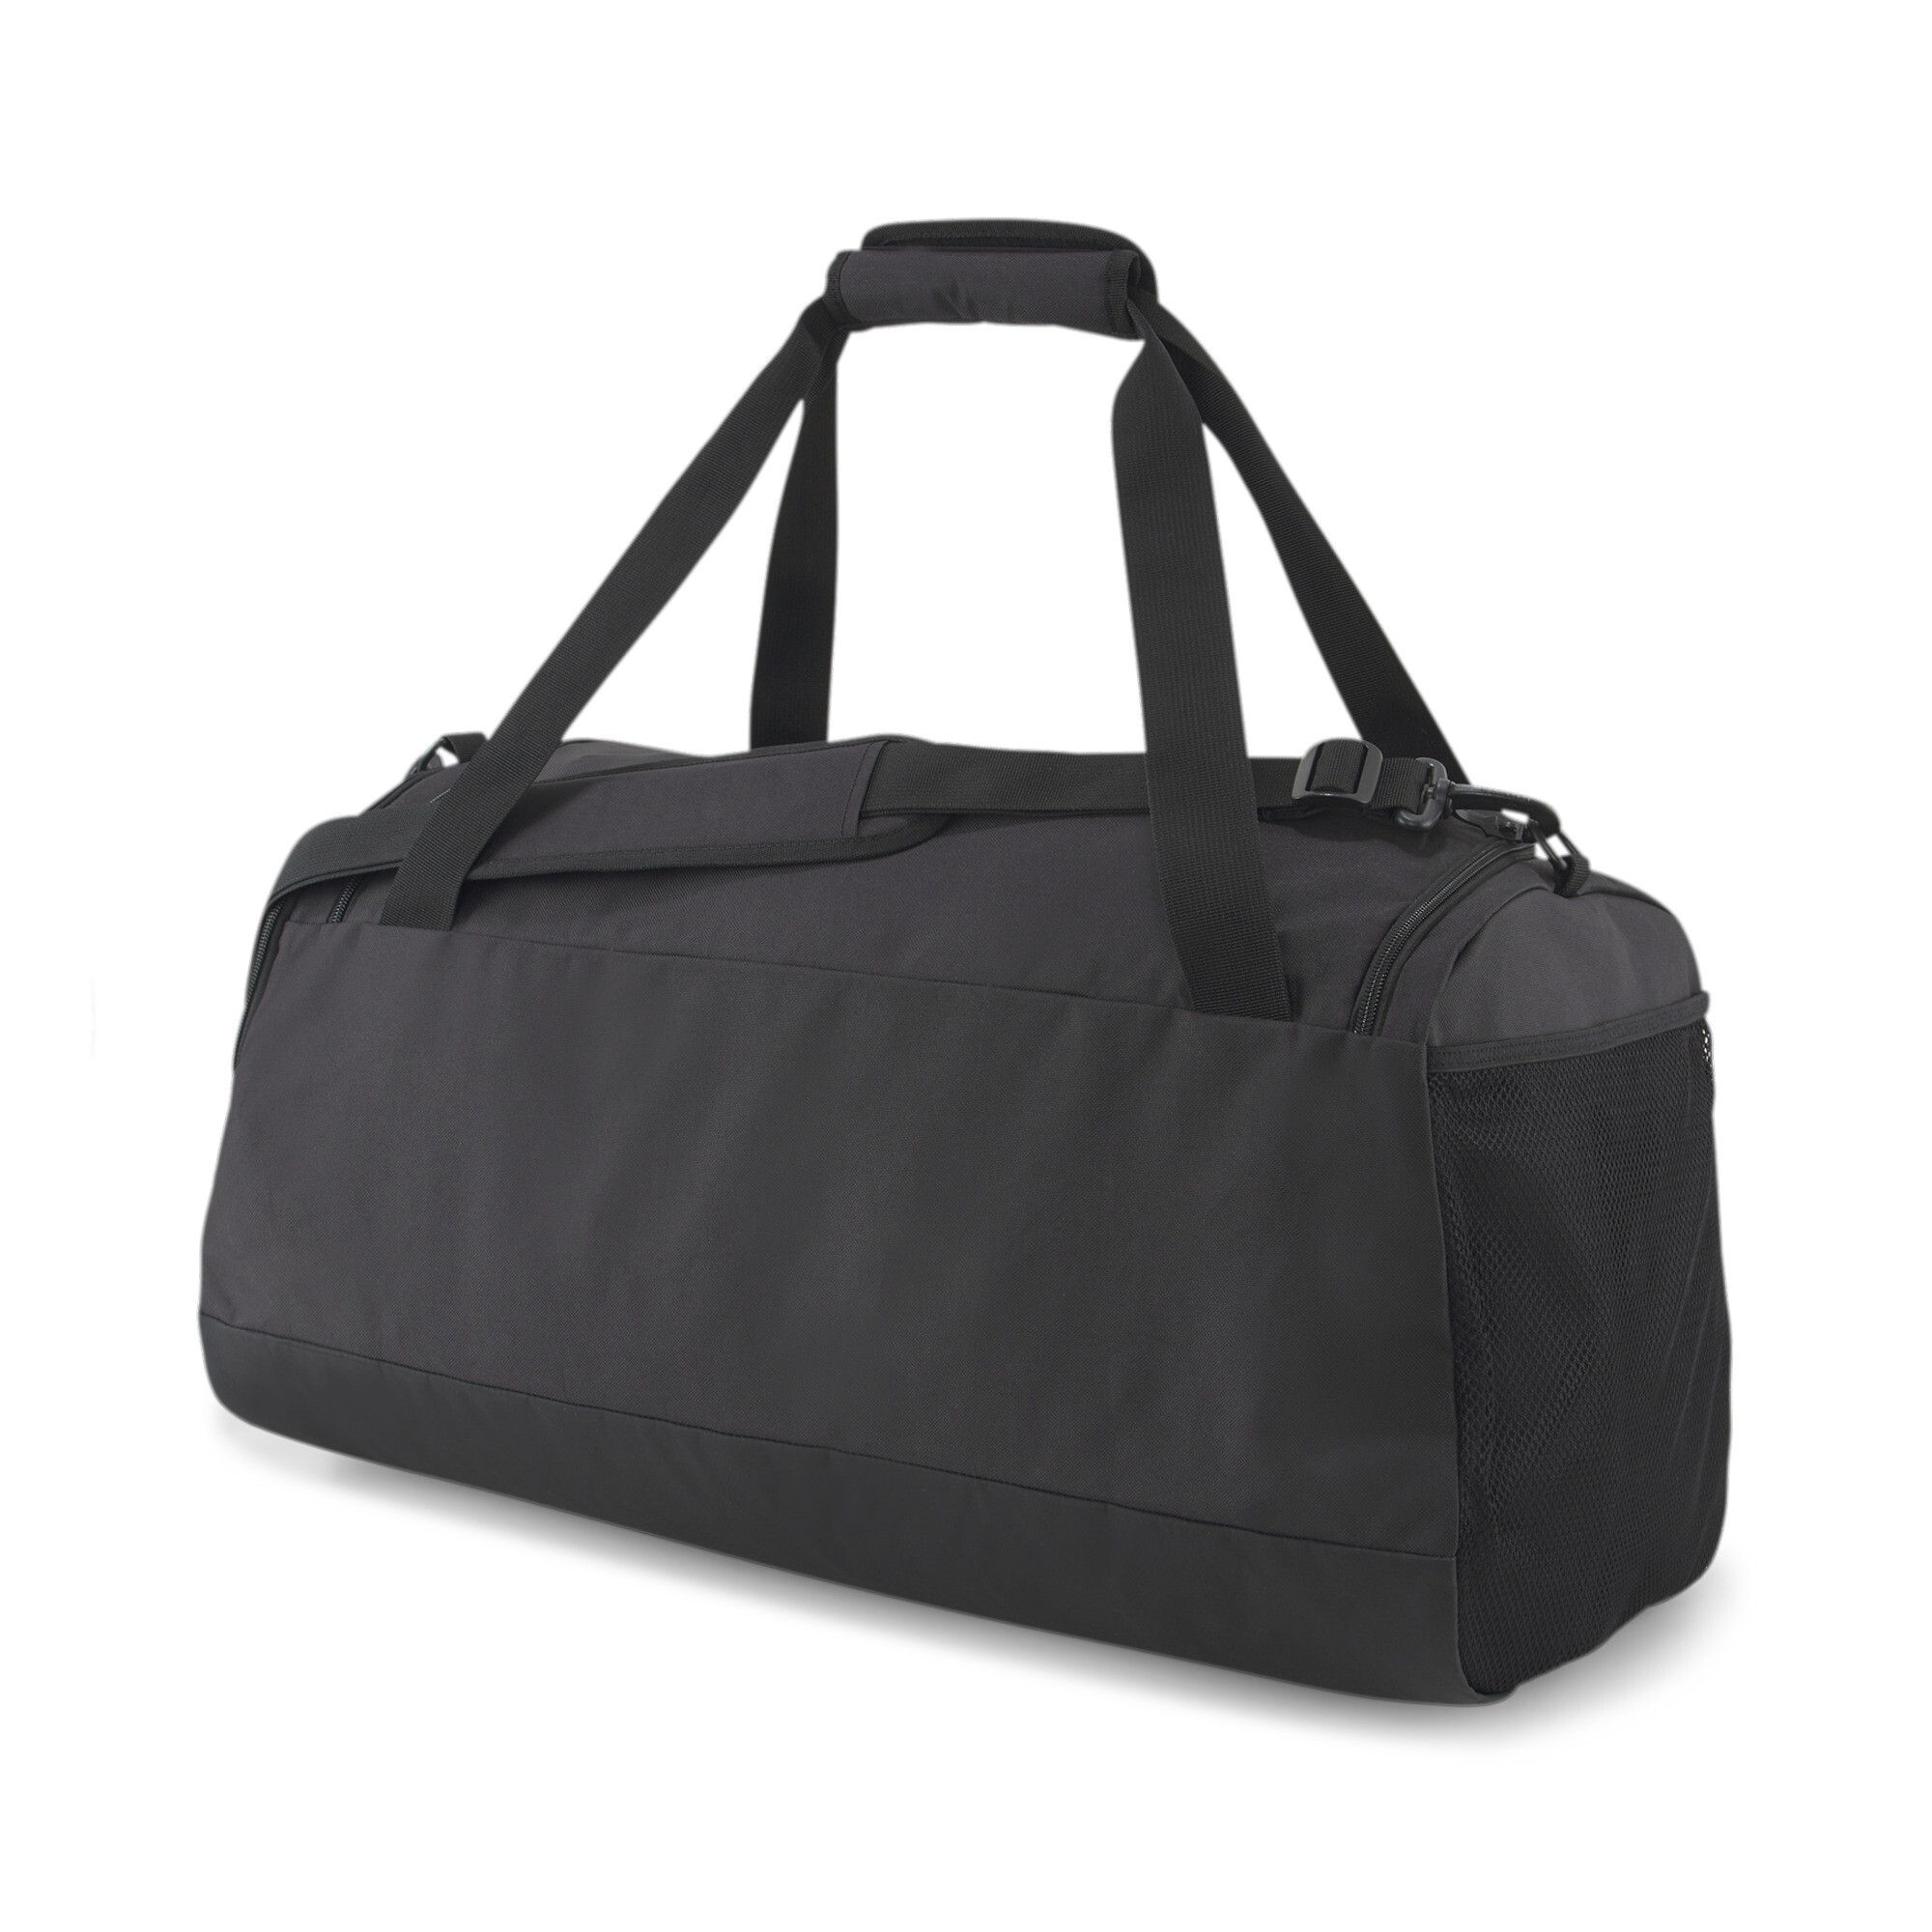 Puma Challenger M Duffle Bag, Black, Accessories